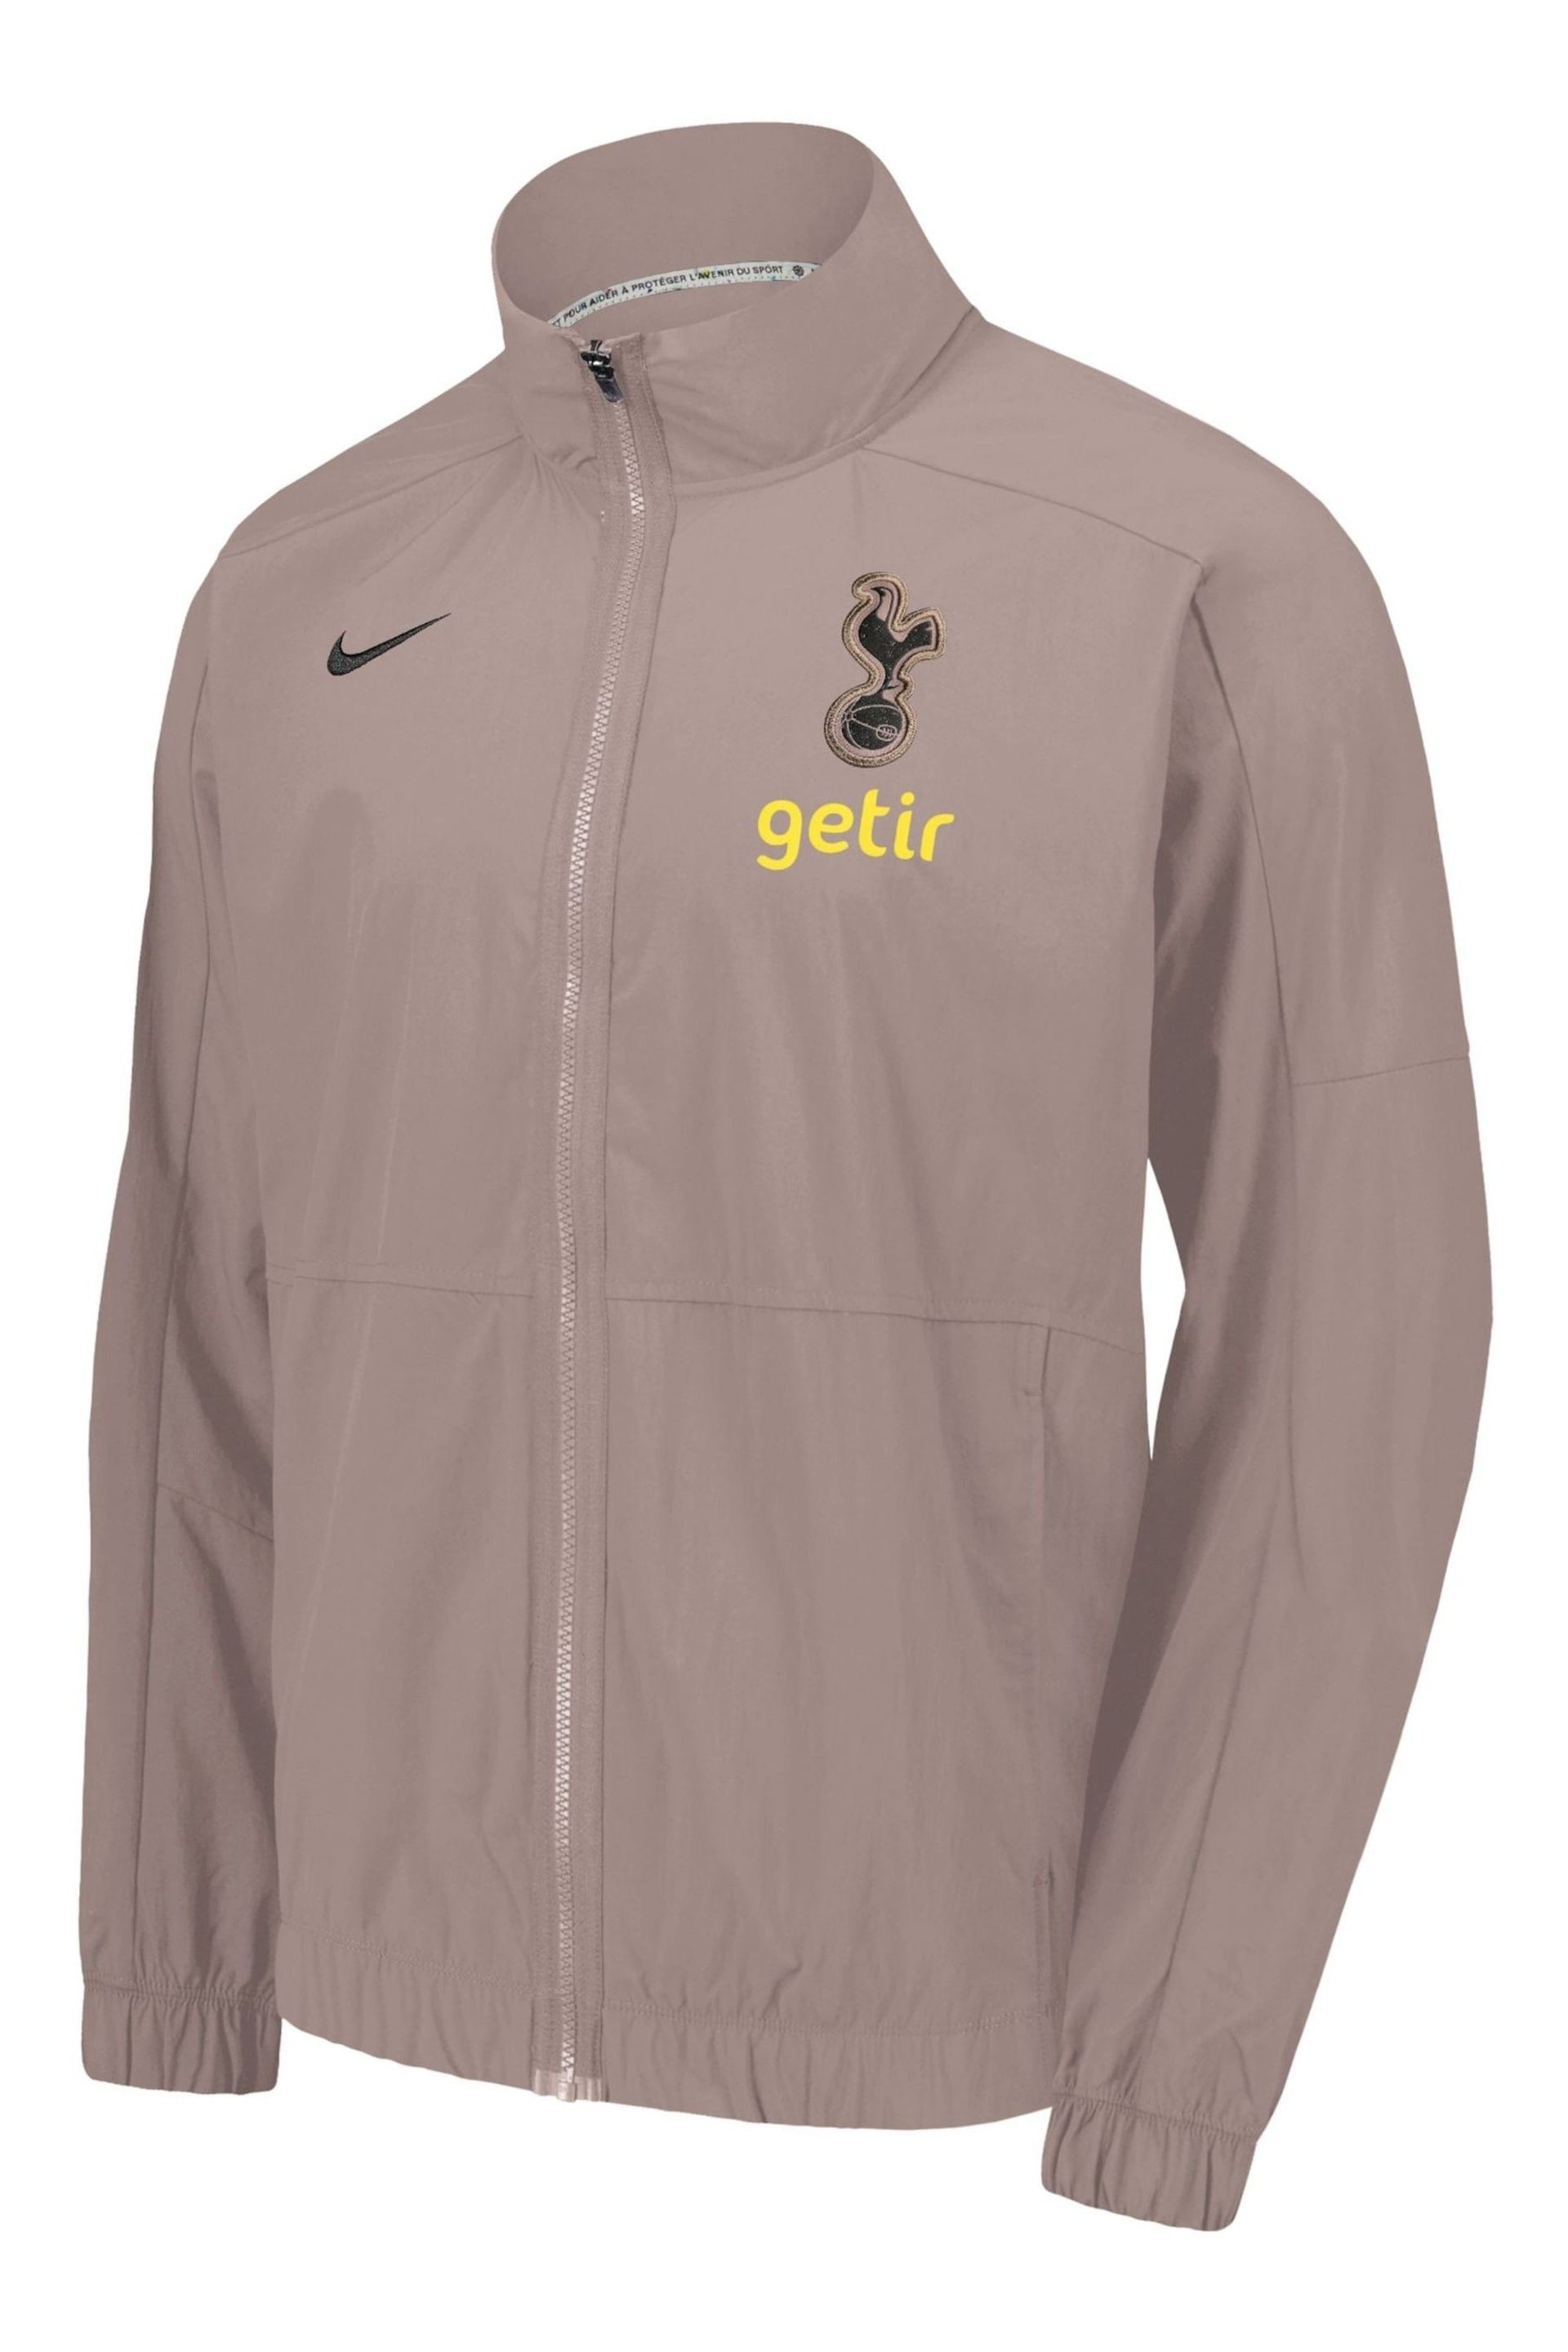 Nike Grey Tottenham Hotspur Revival Woven Track Jacket - Image 2 of 4